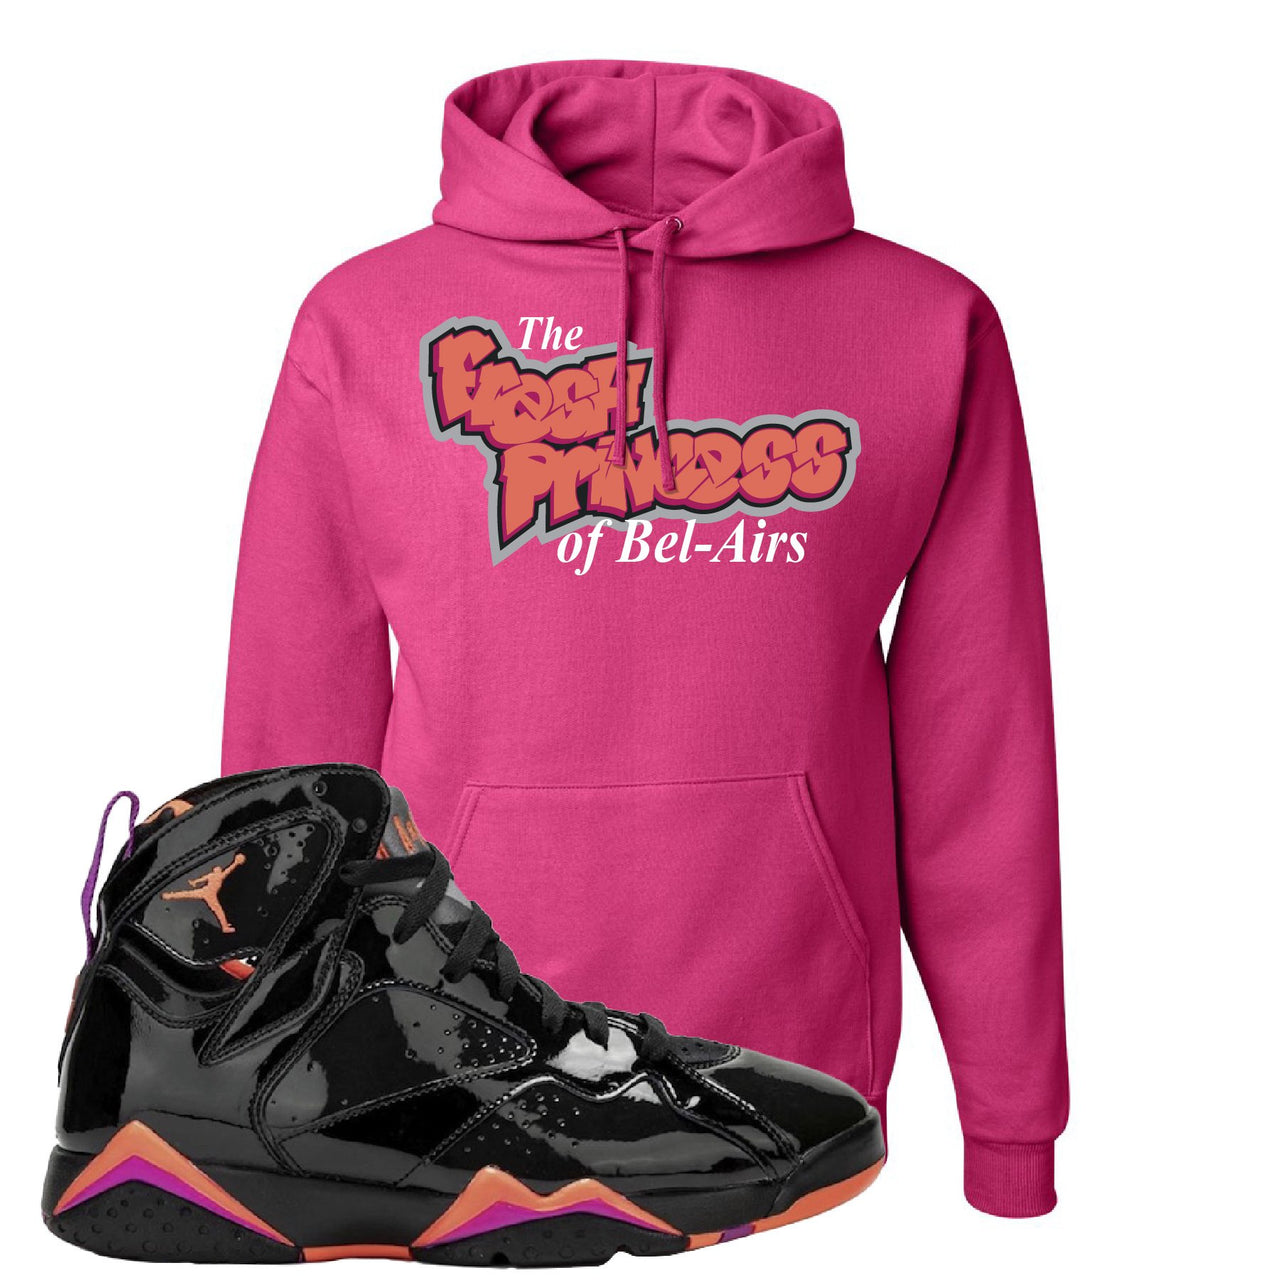 Jordan 7 WMNS Black Patent Leather The Fresh Princess Of Bel Air Cyber Pink Sneaker Hook Up Pullover Hoodie